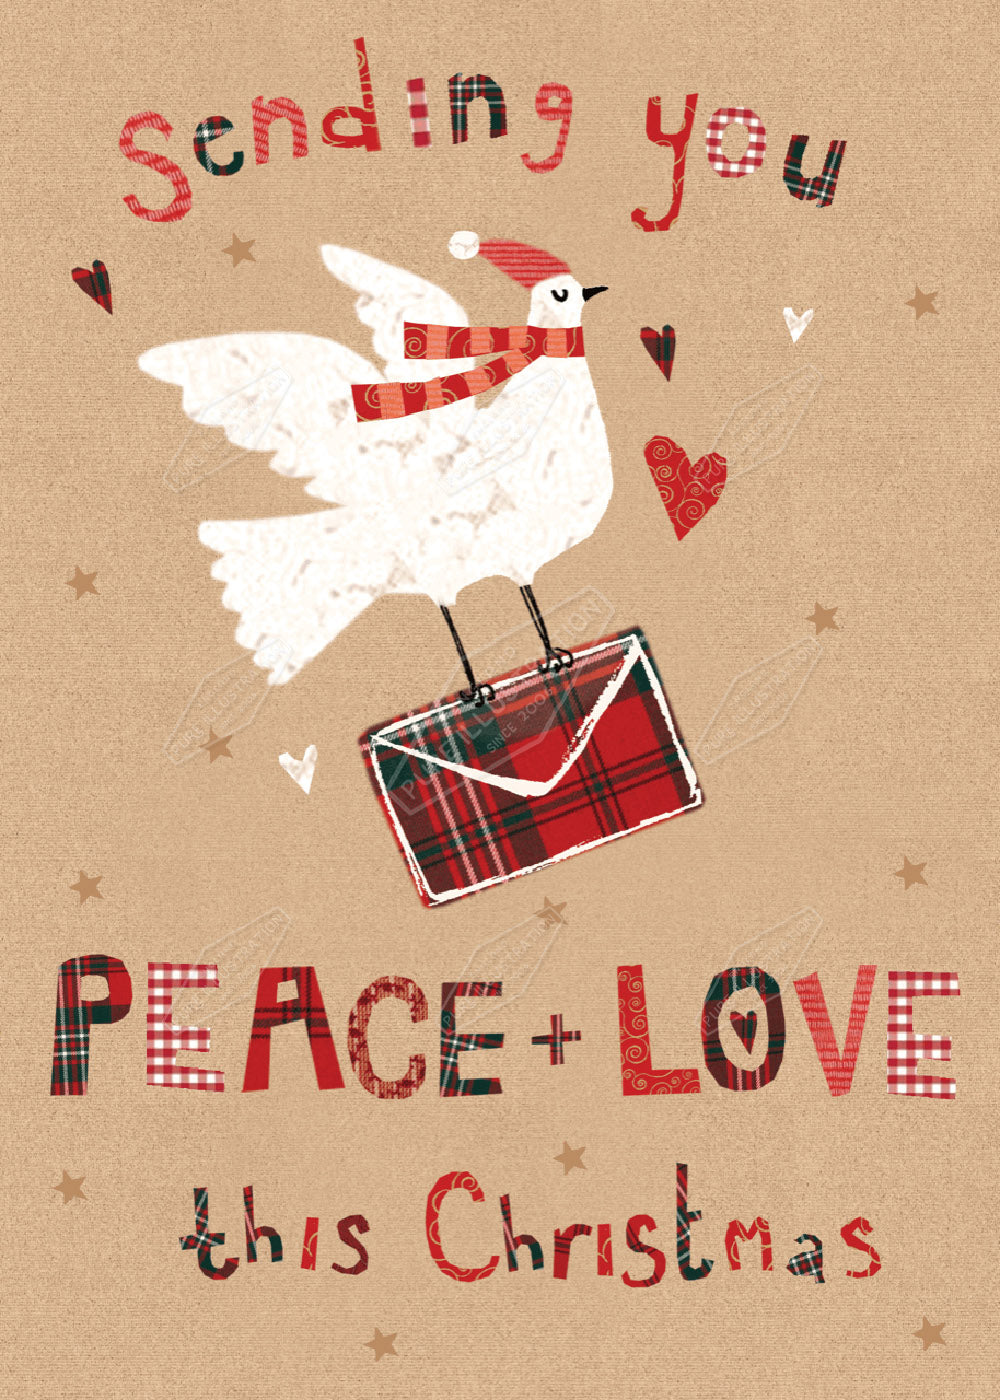 00033199DEV - Deva Evans is represented by Pure Art Licensing Agency - Christmas Greeting Card Design